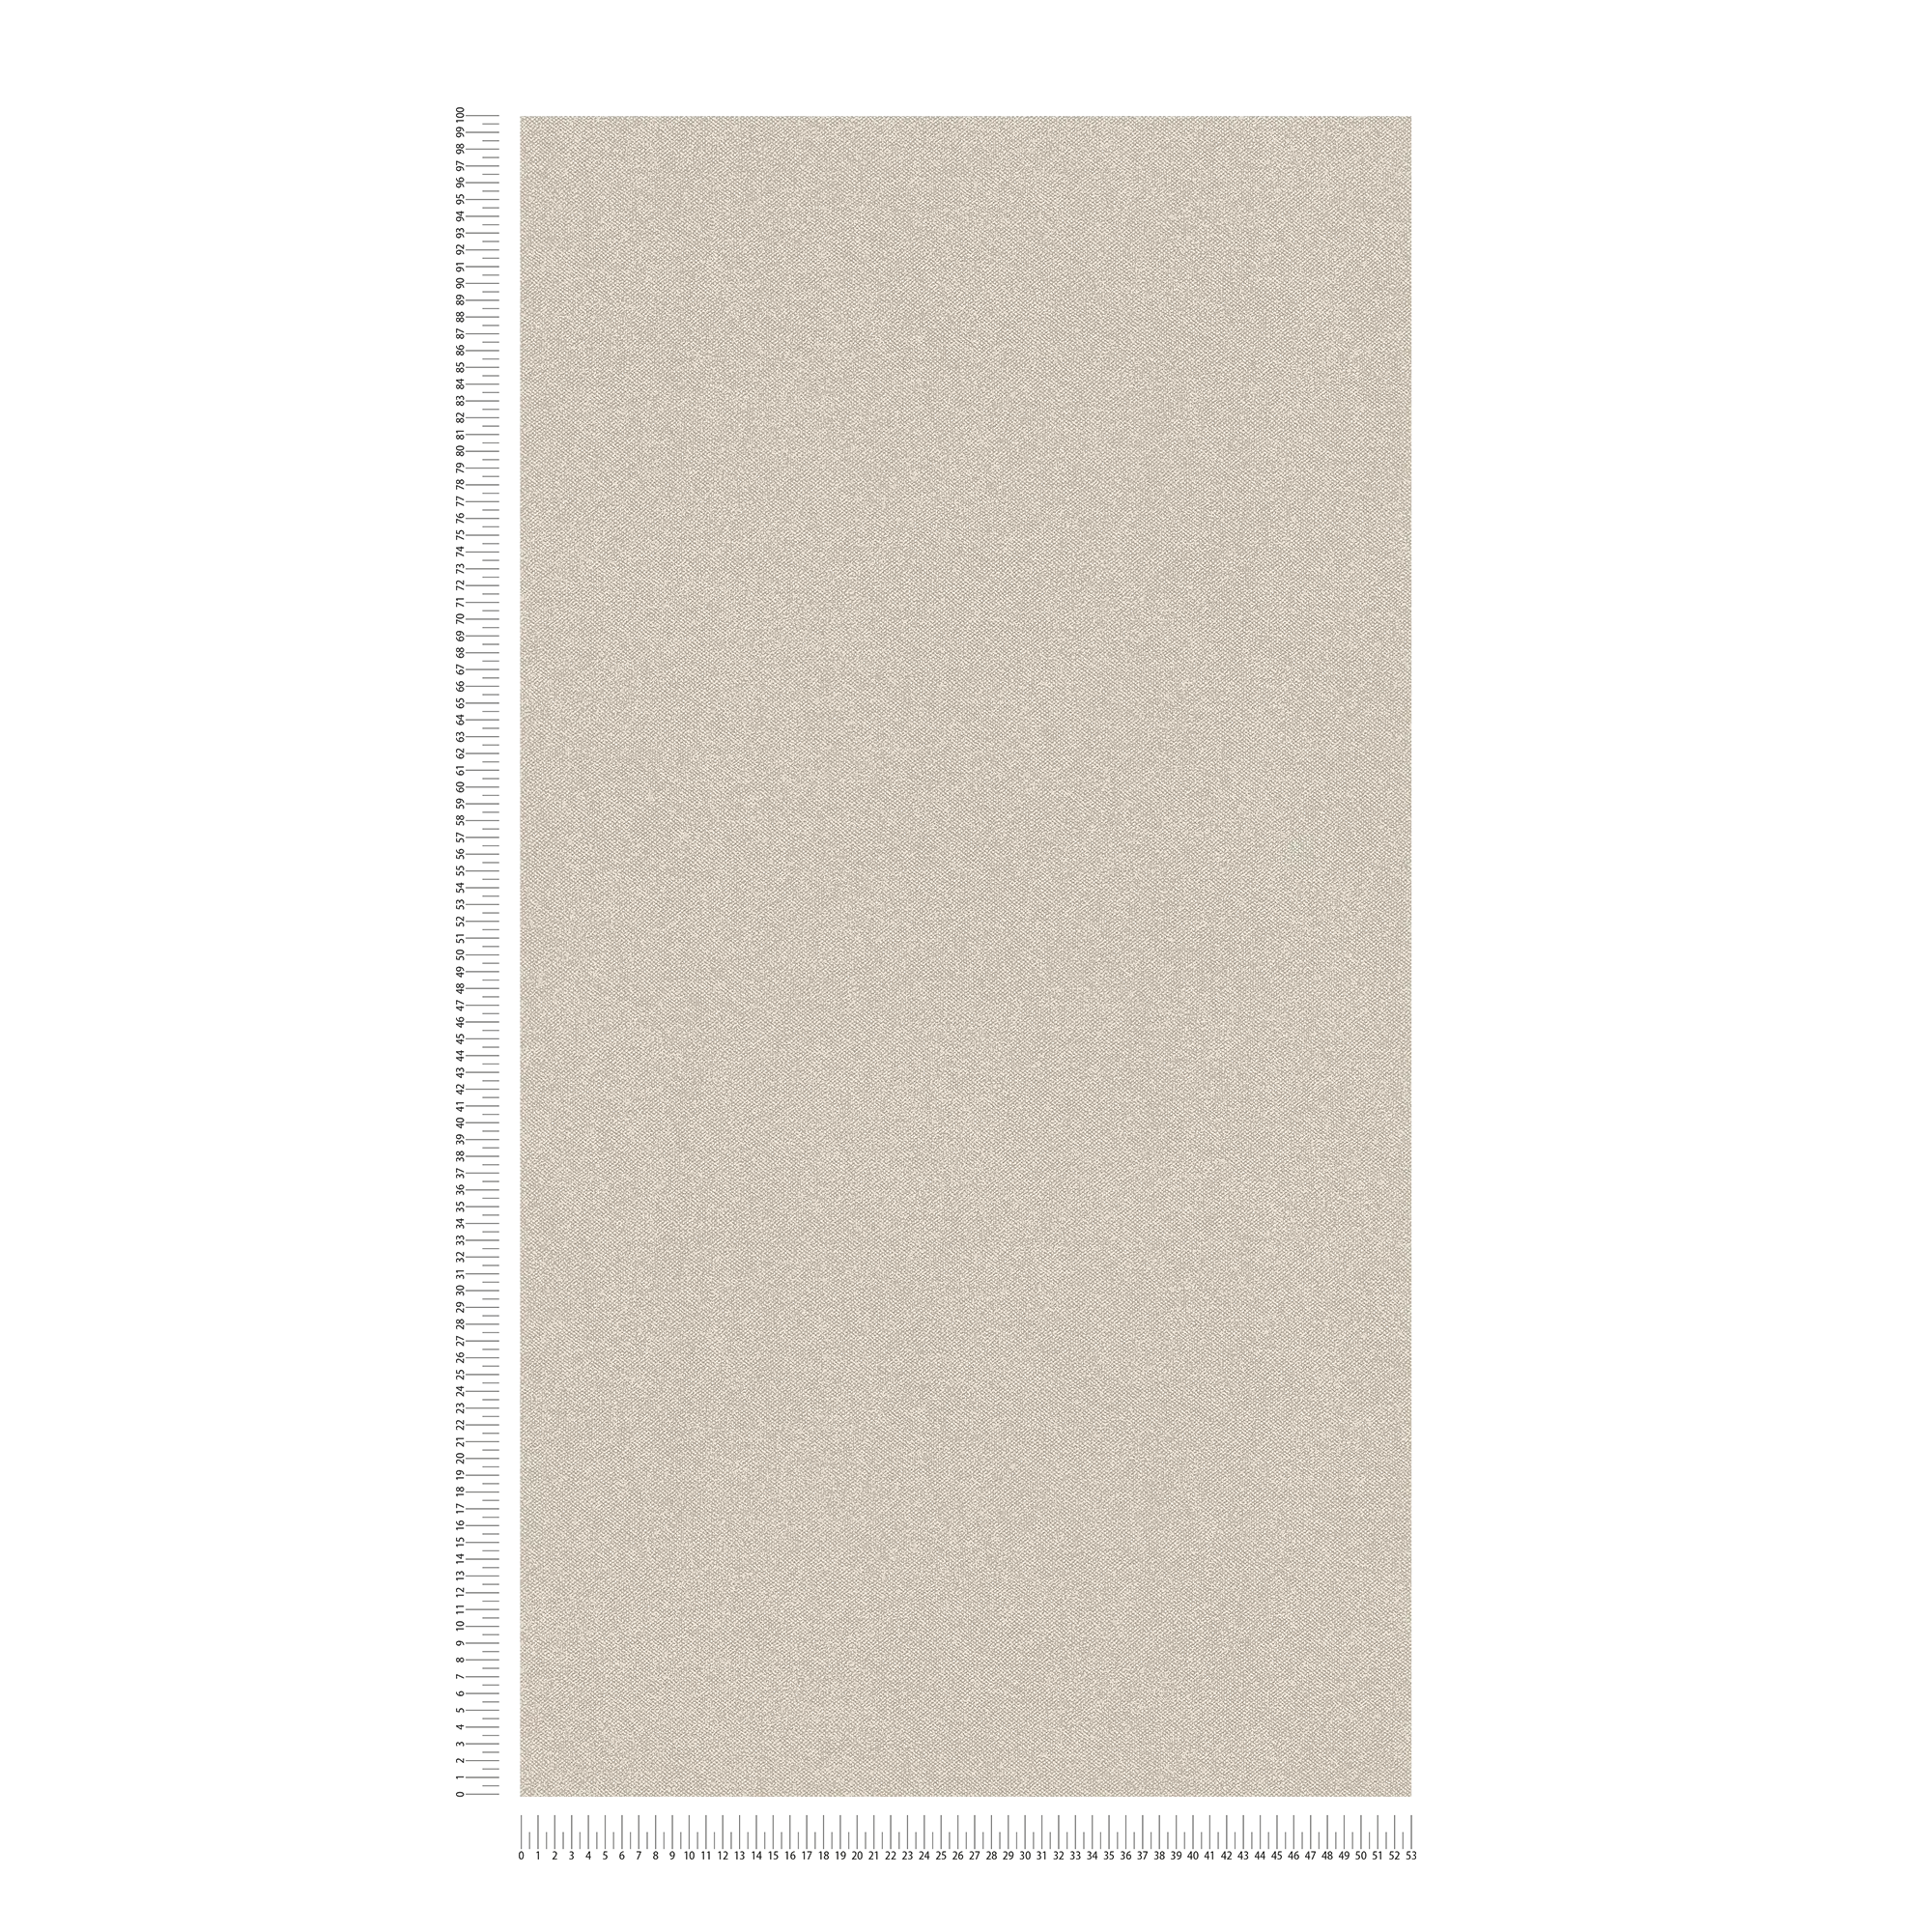             Textile optics wallpaper plain - beige, cream
        